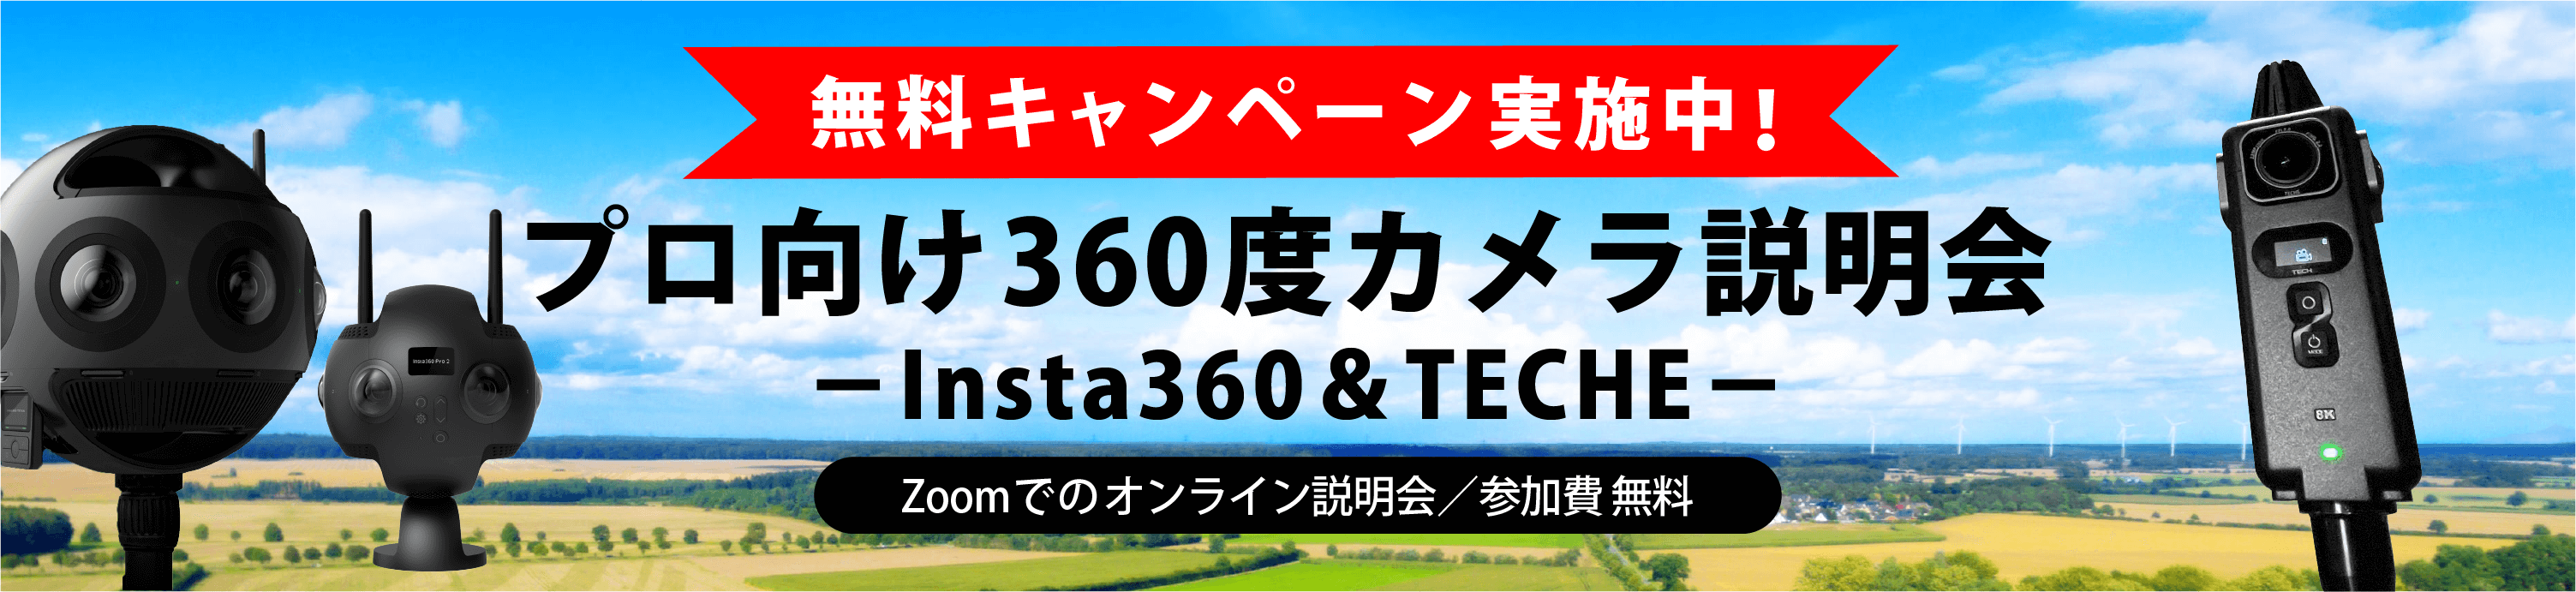 Insta360・360Anywhere体験会バナー